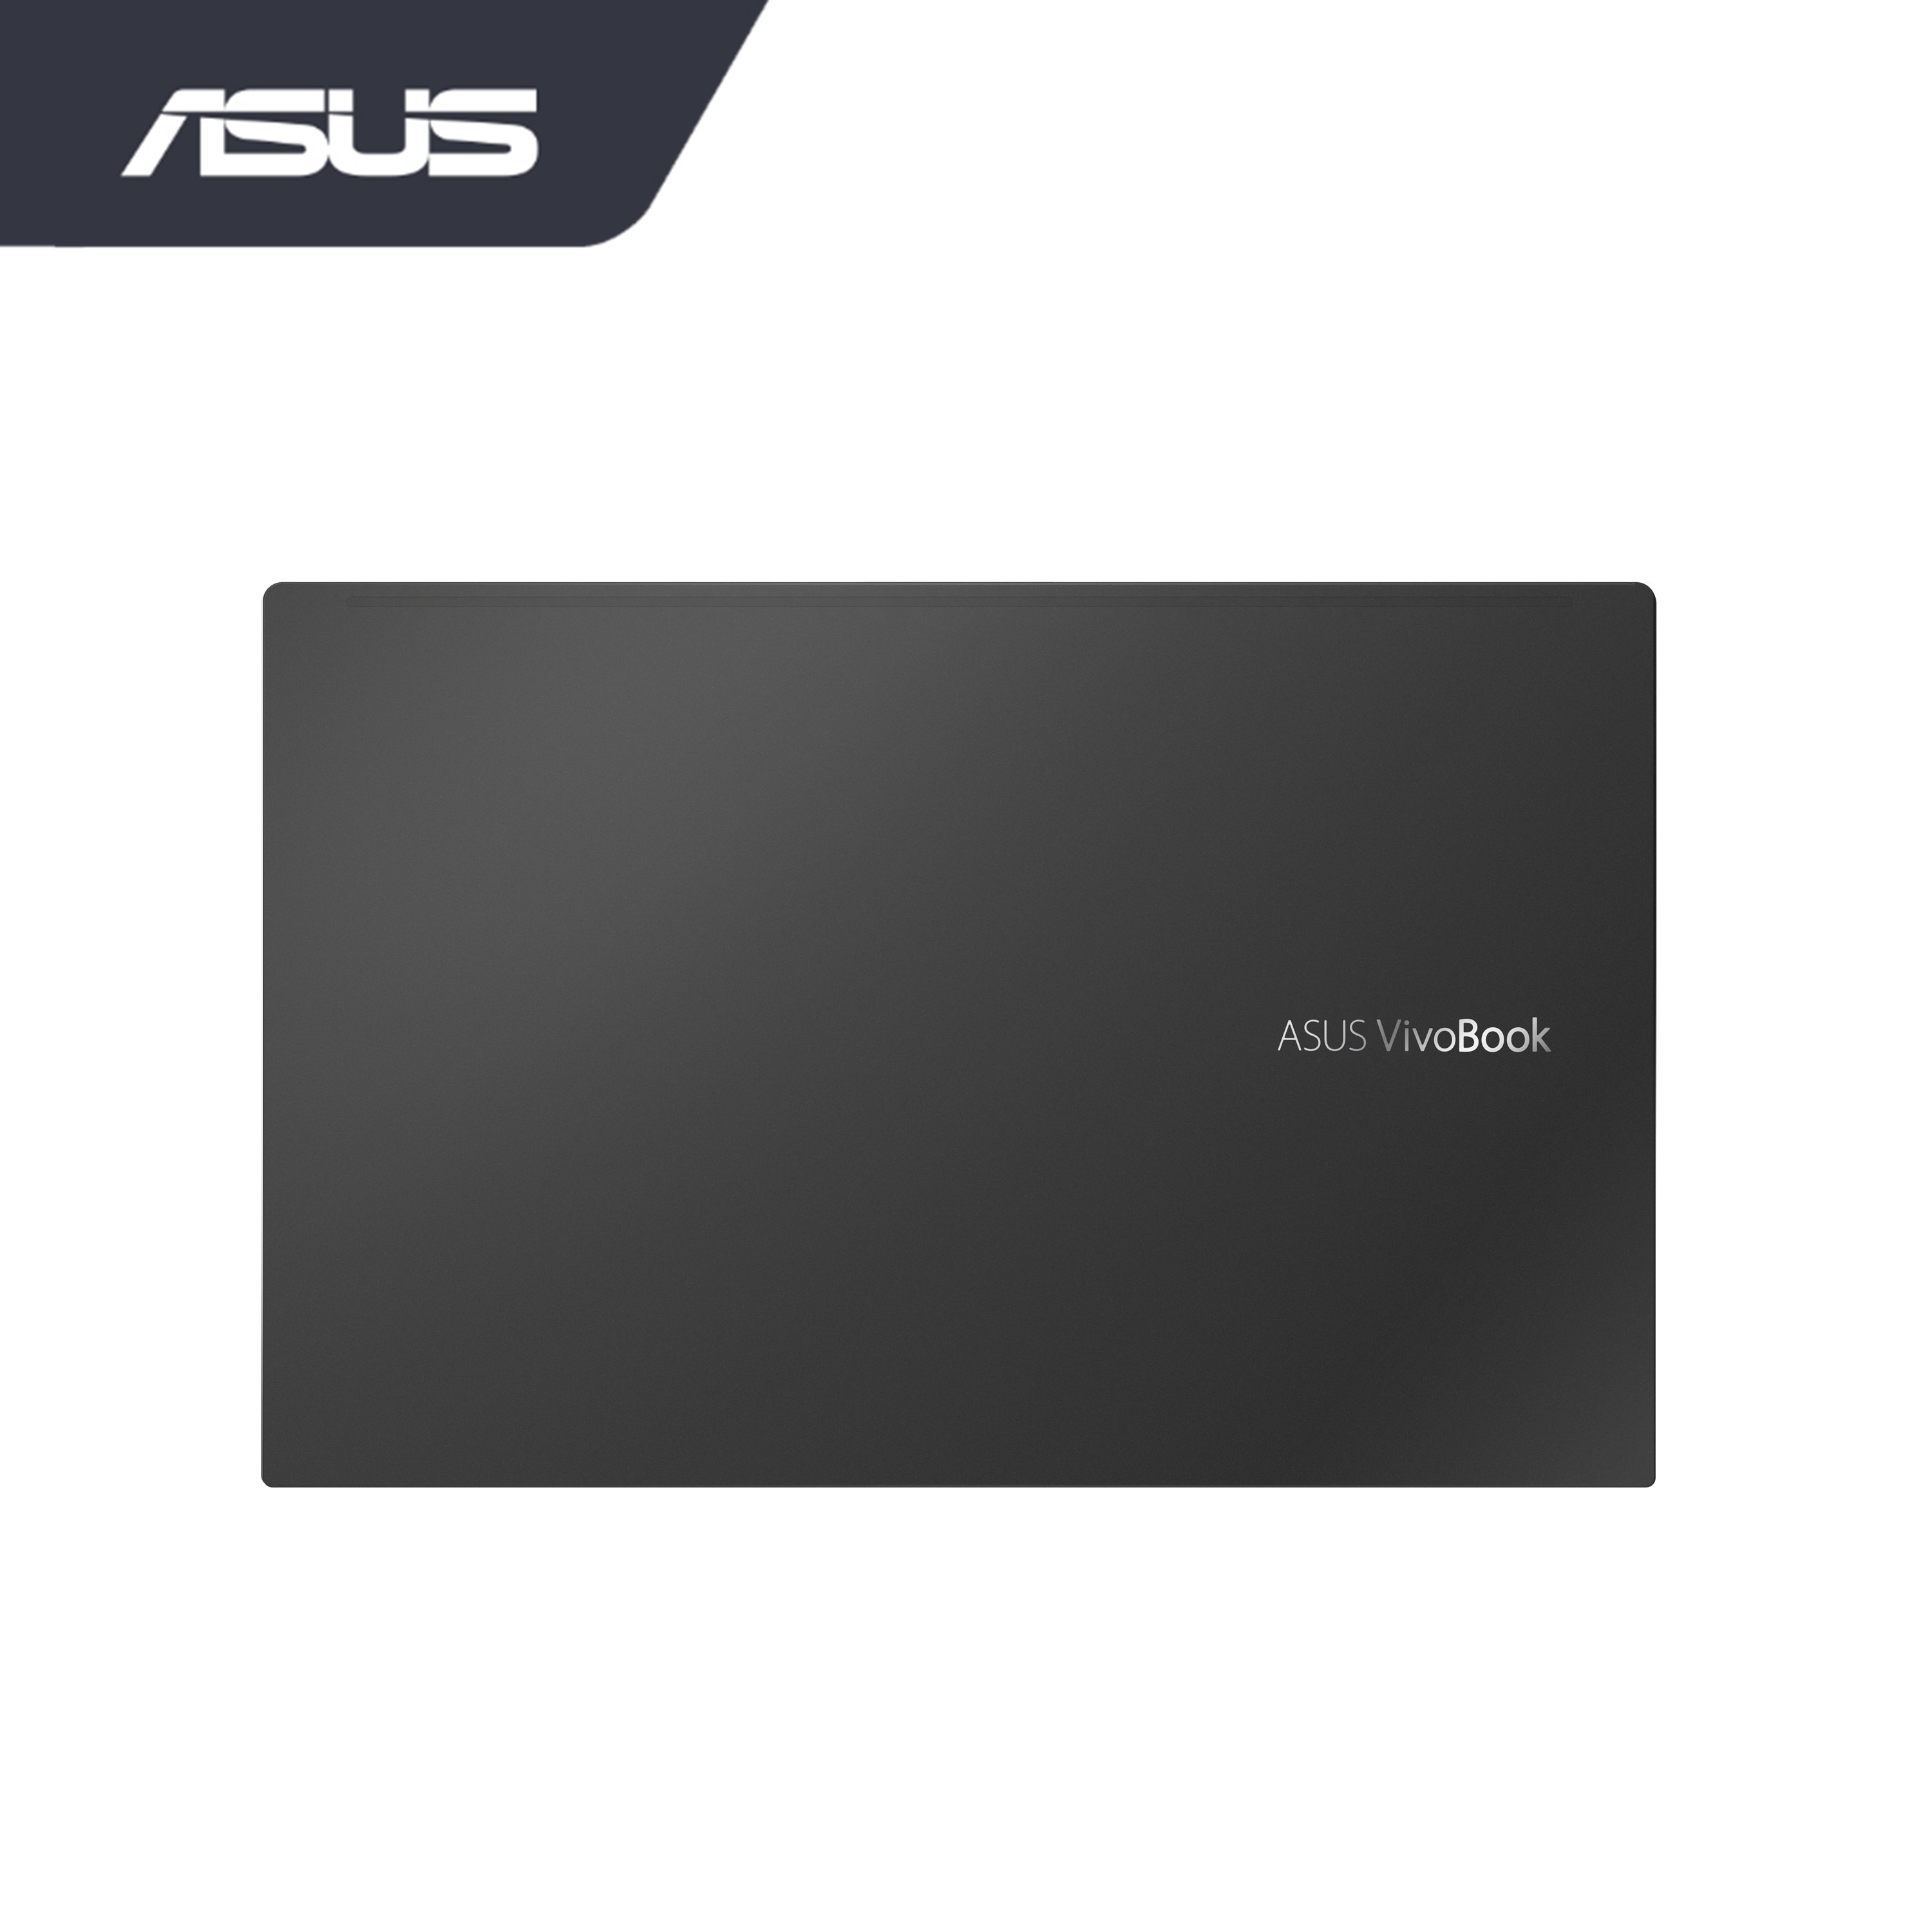 Asus Vivobook S S533e Abn603ws Laptop Indie Black I7 1165g7 8gb Ram 512gb Ssd 156fhd